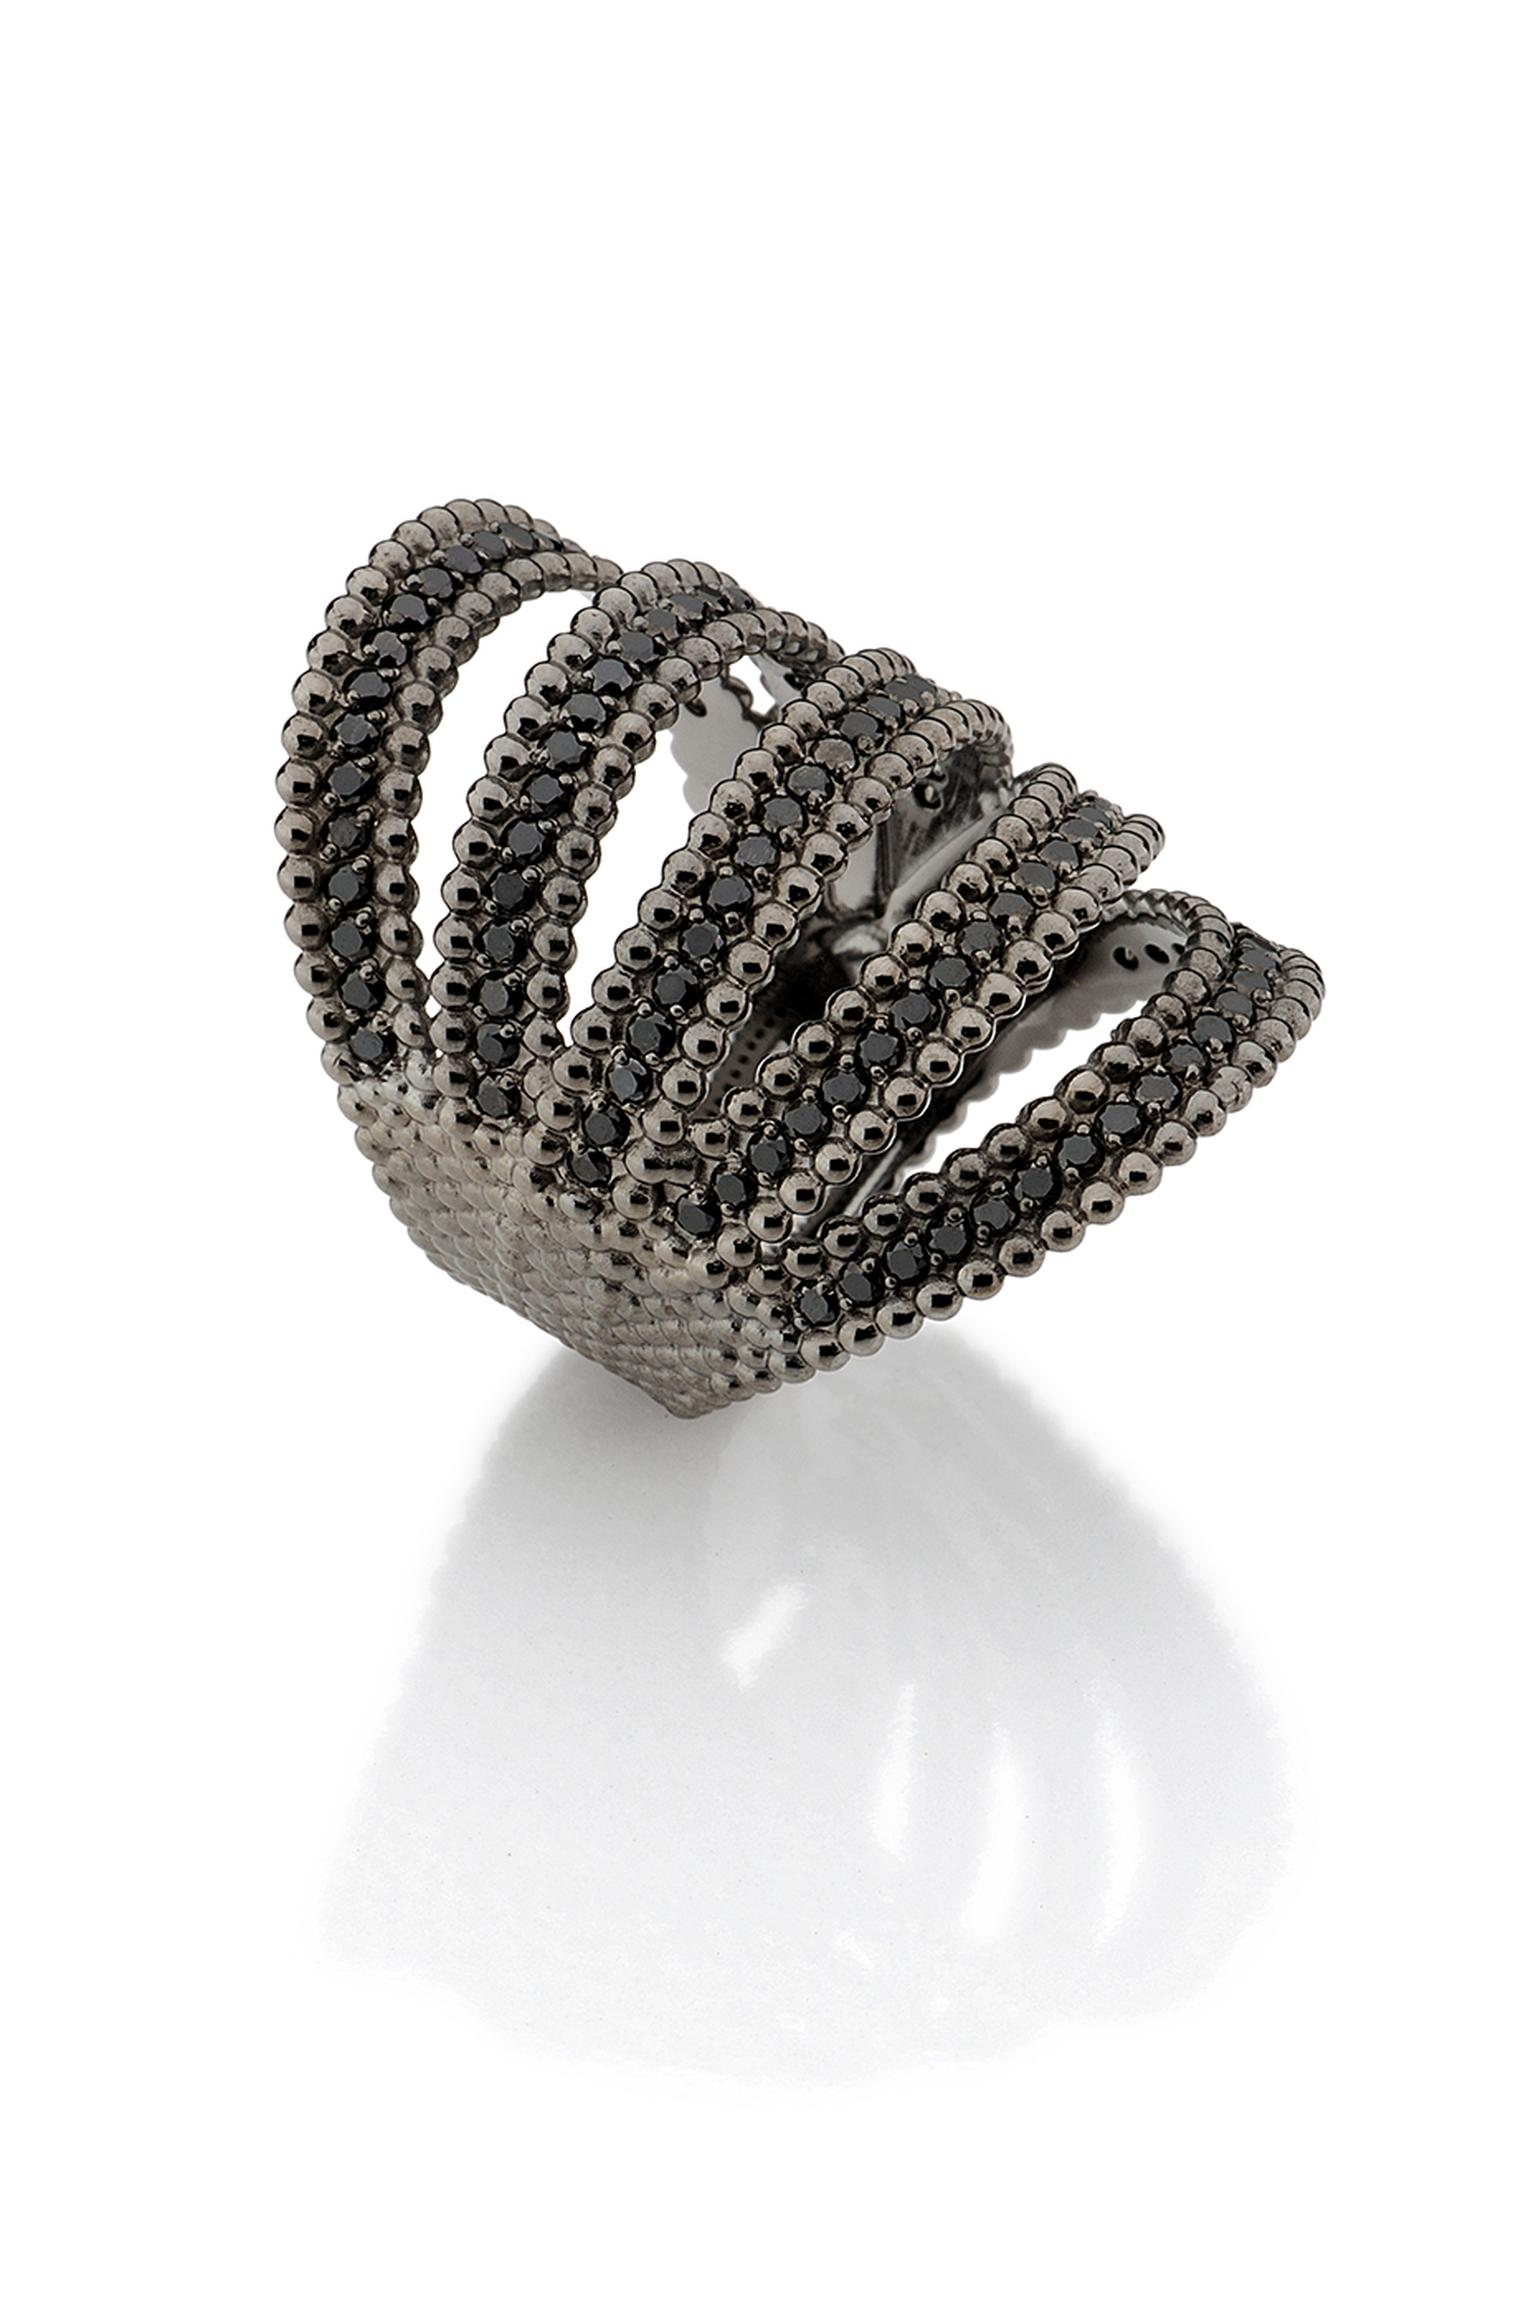 The Carla Amorim black diamond ring worn by January Jones to the 2014 Emmy Awards.